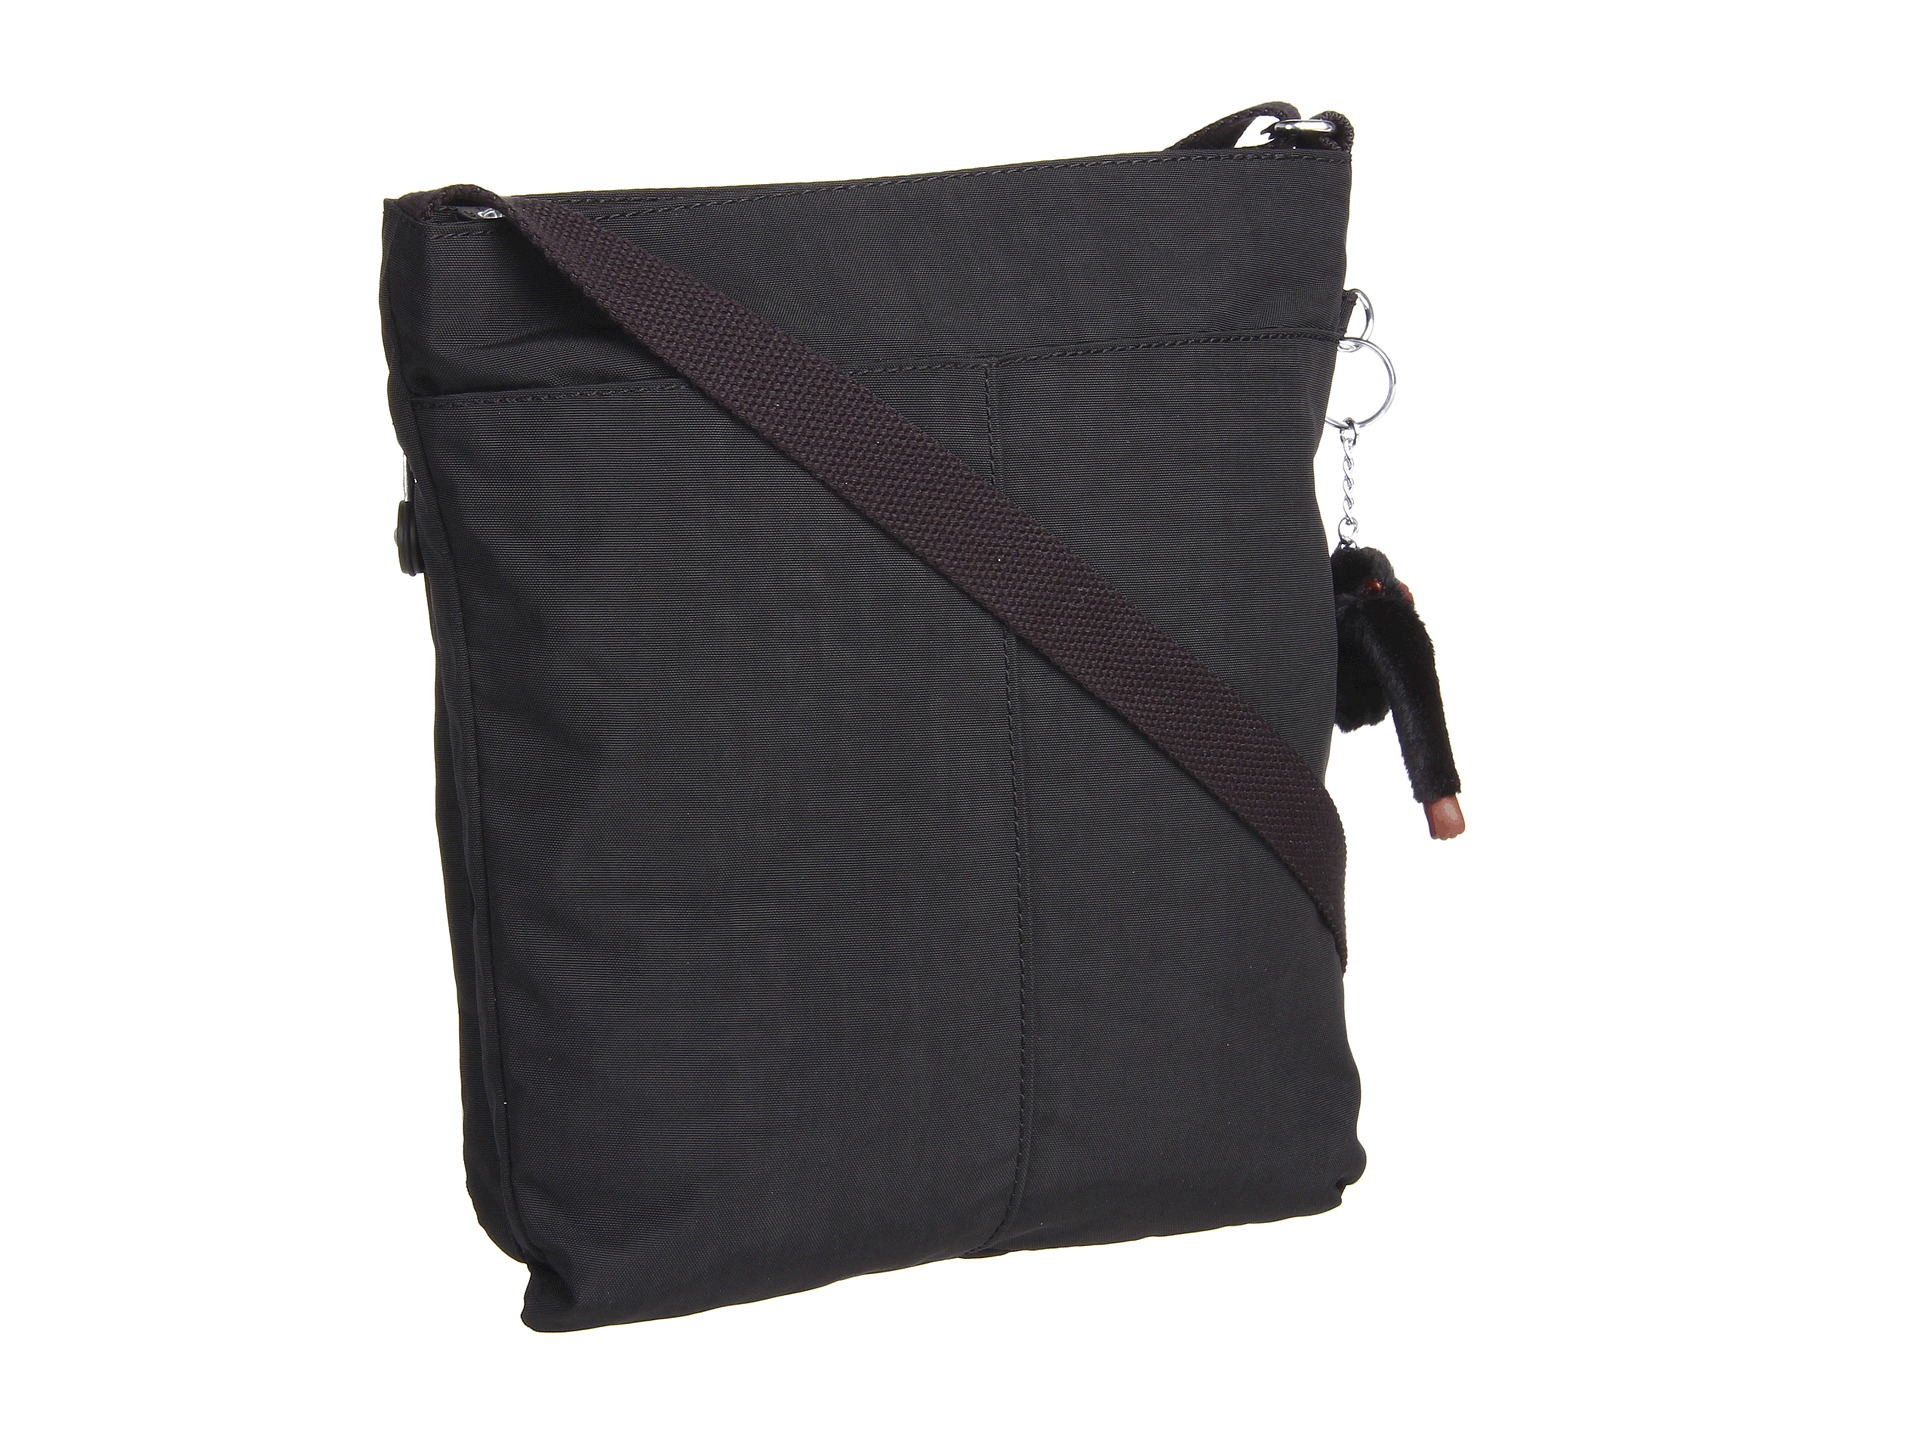 Kipling Machida Shoulder Bag, Bags | Shipped Free at Zappos